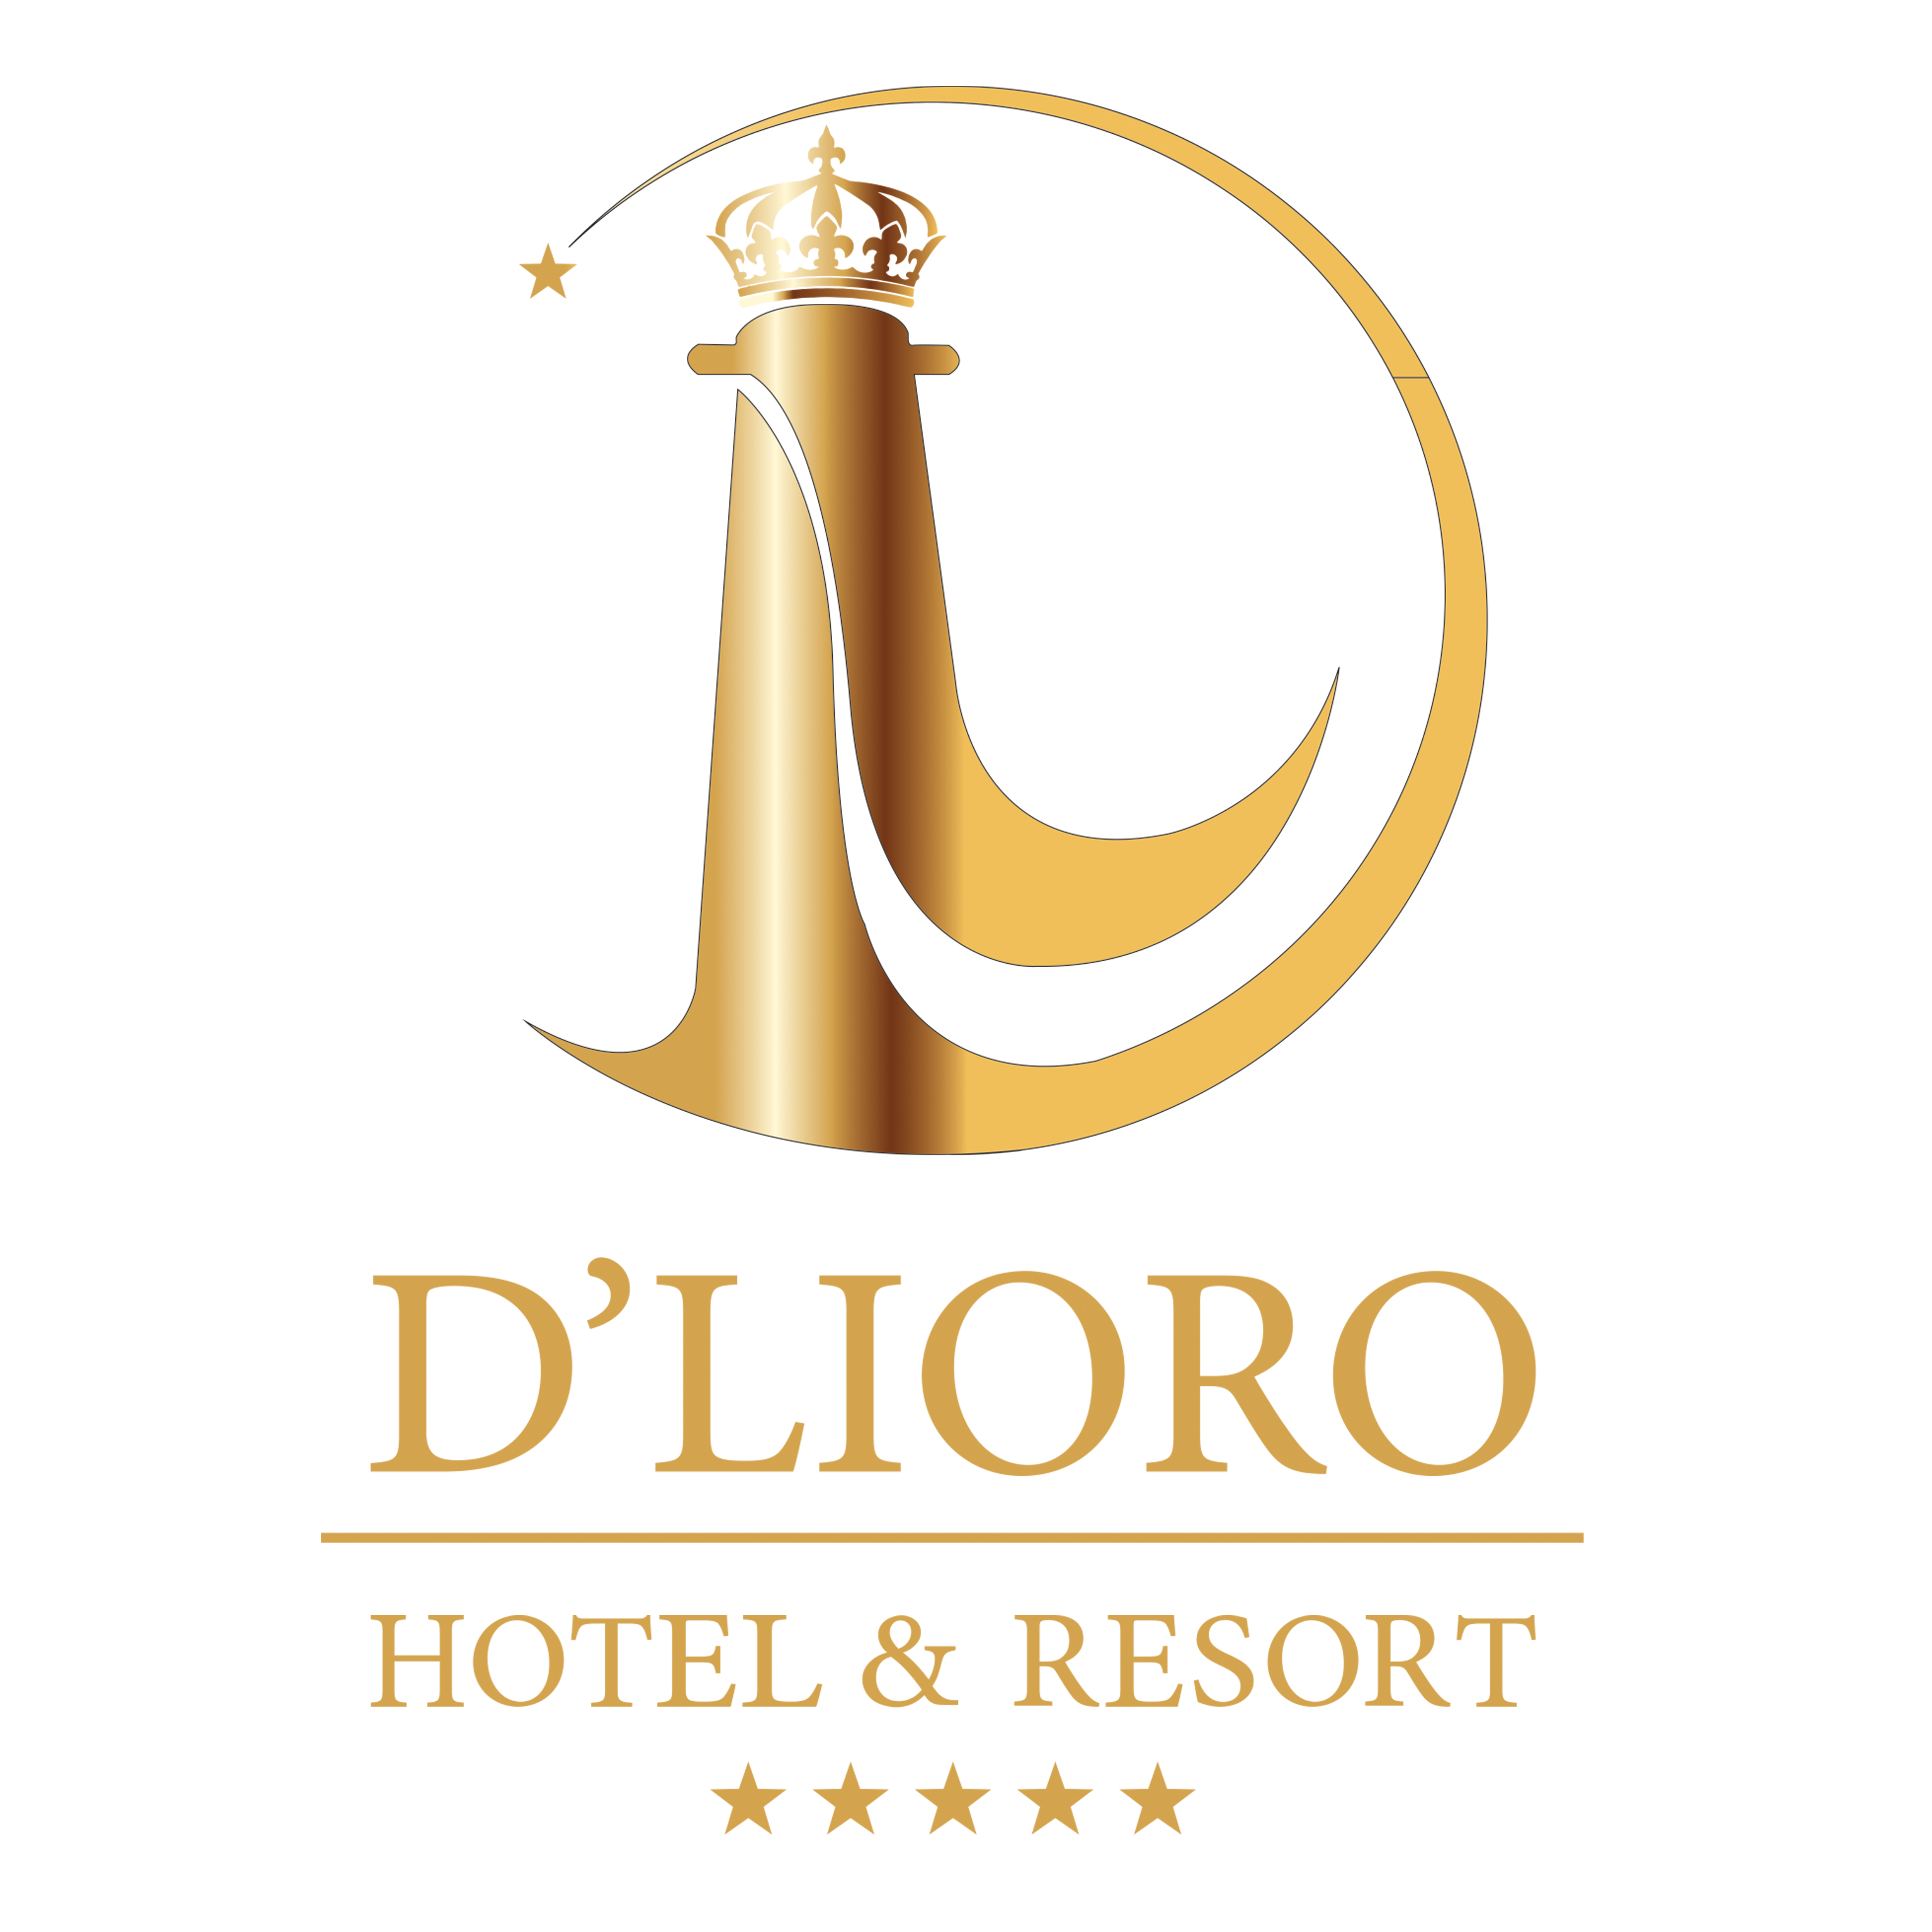 D'lioro Hotel & Resort